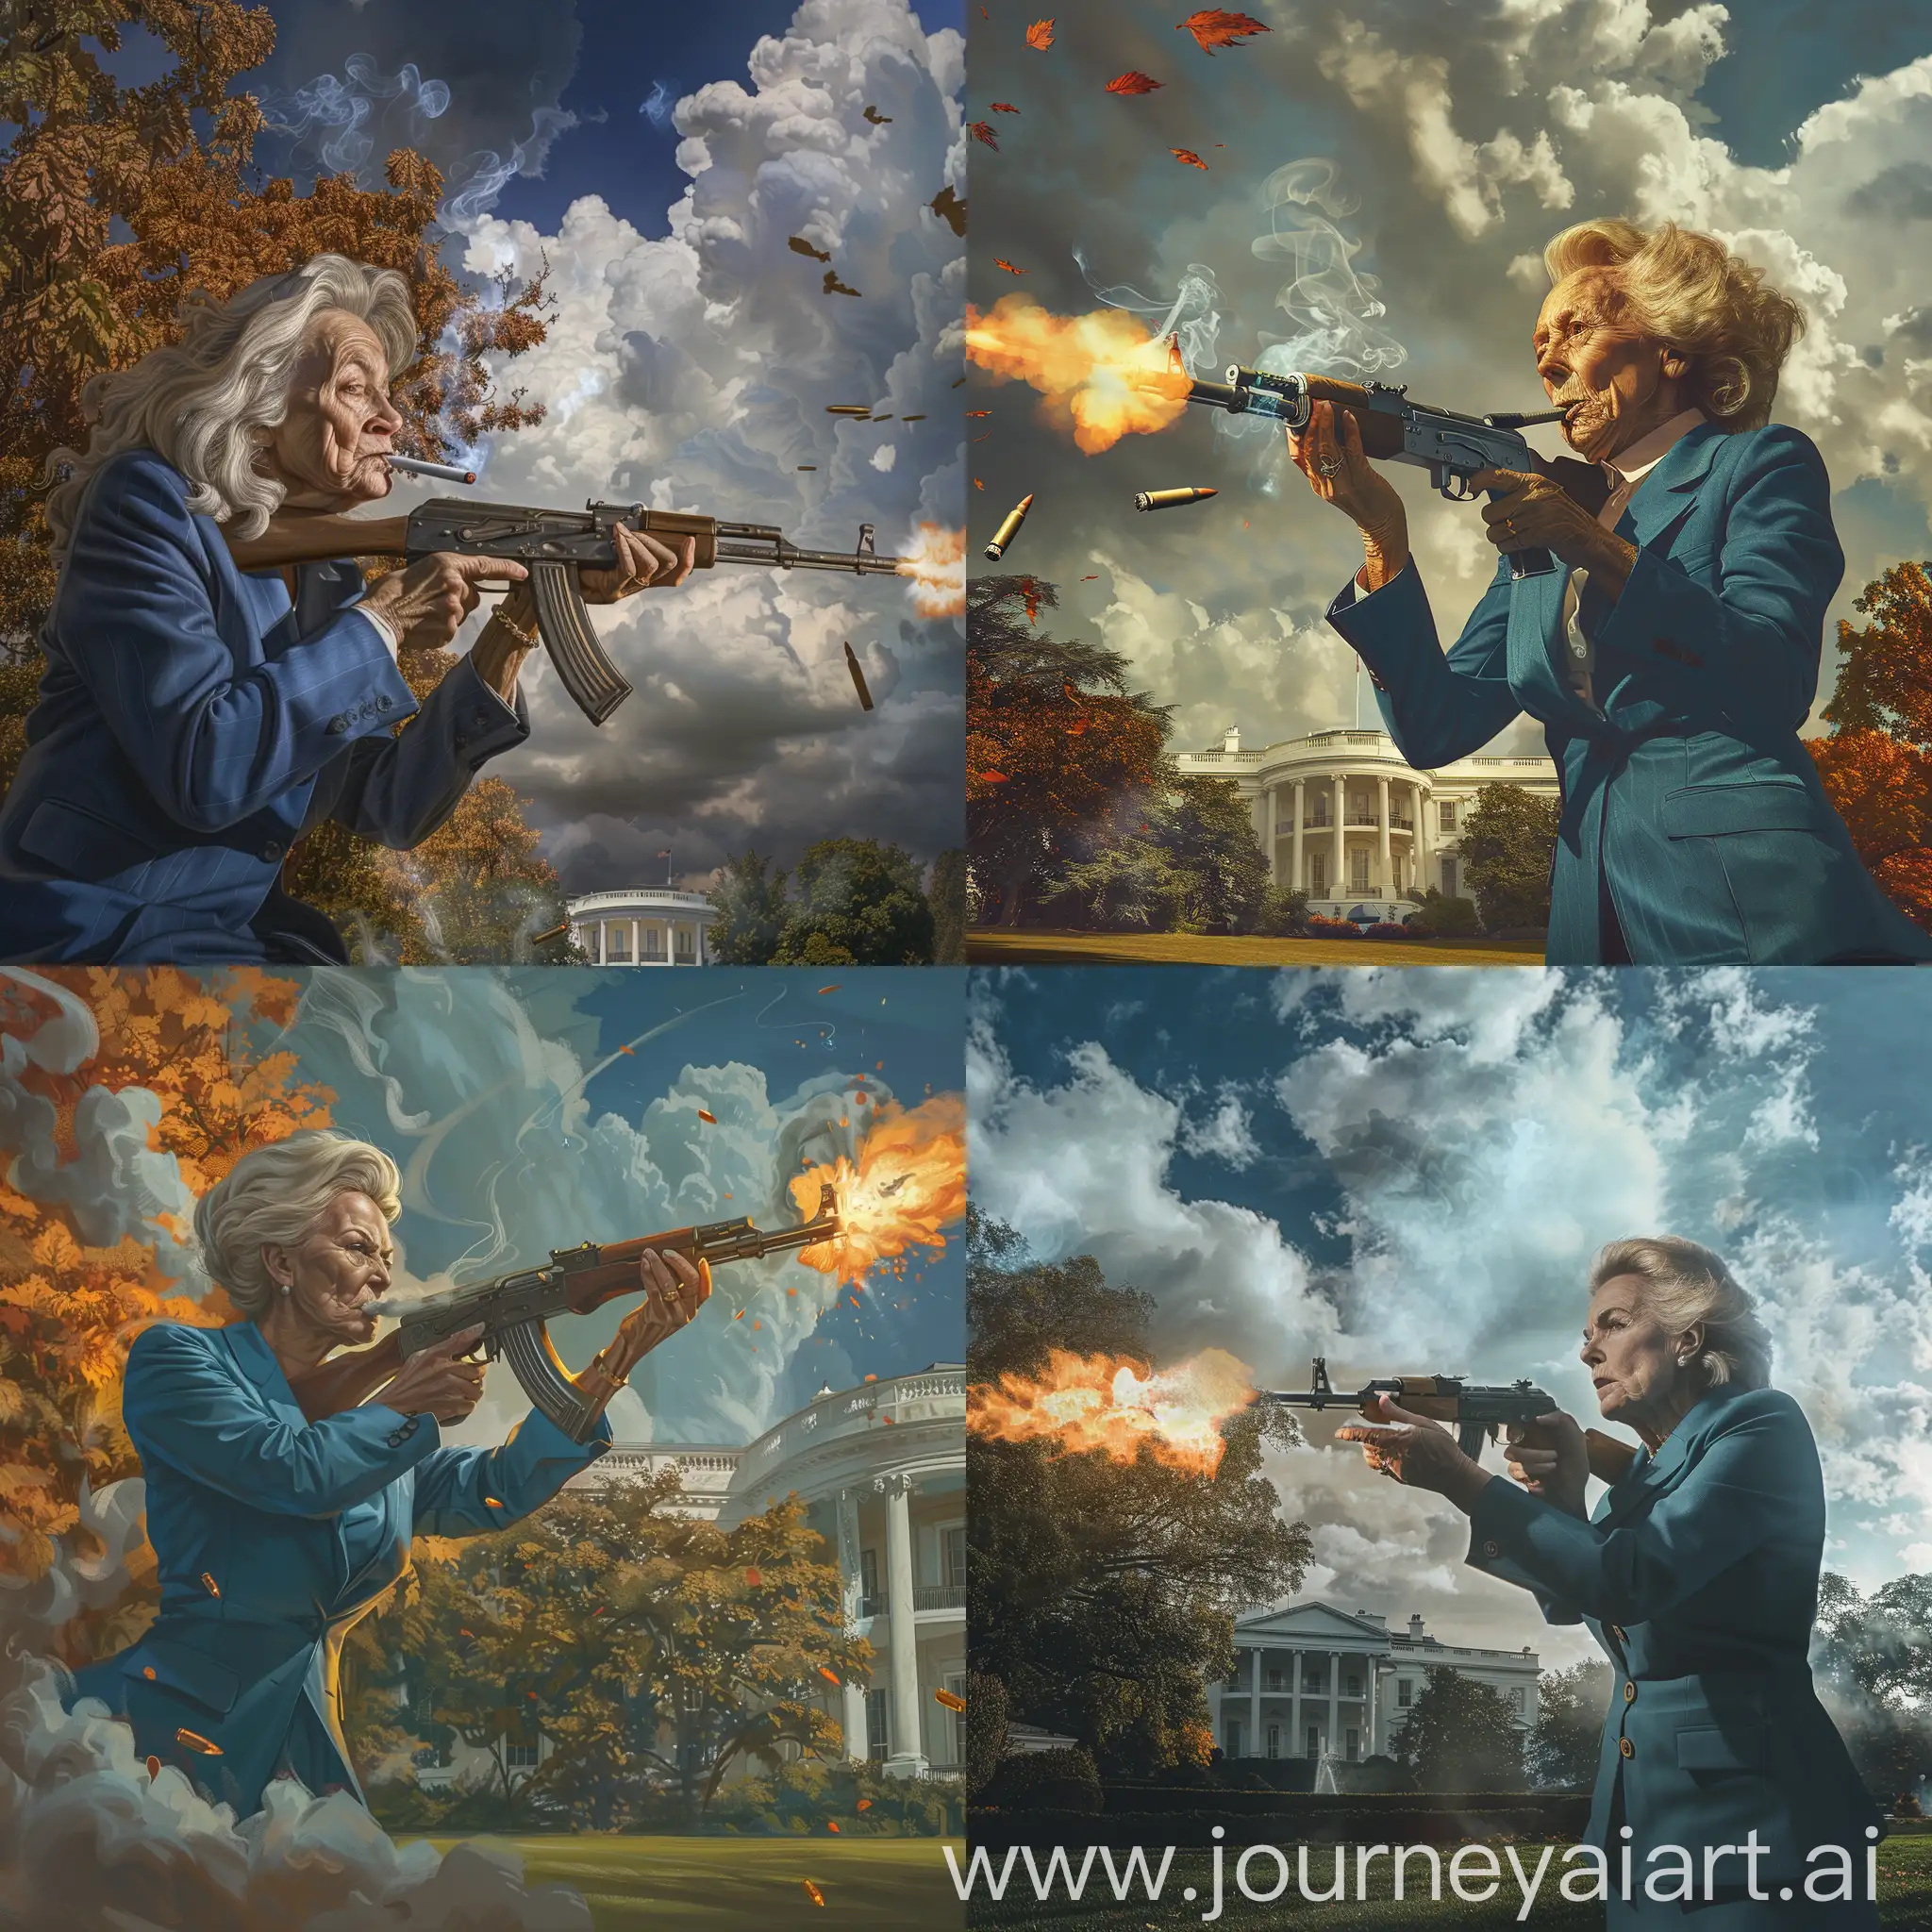 Hillary-Clinton-Lookalike-Fires-Soviet-AK47-on-White-House-Lawn-in-Autumn